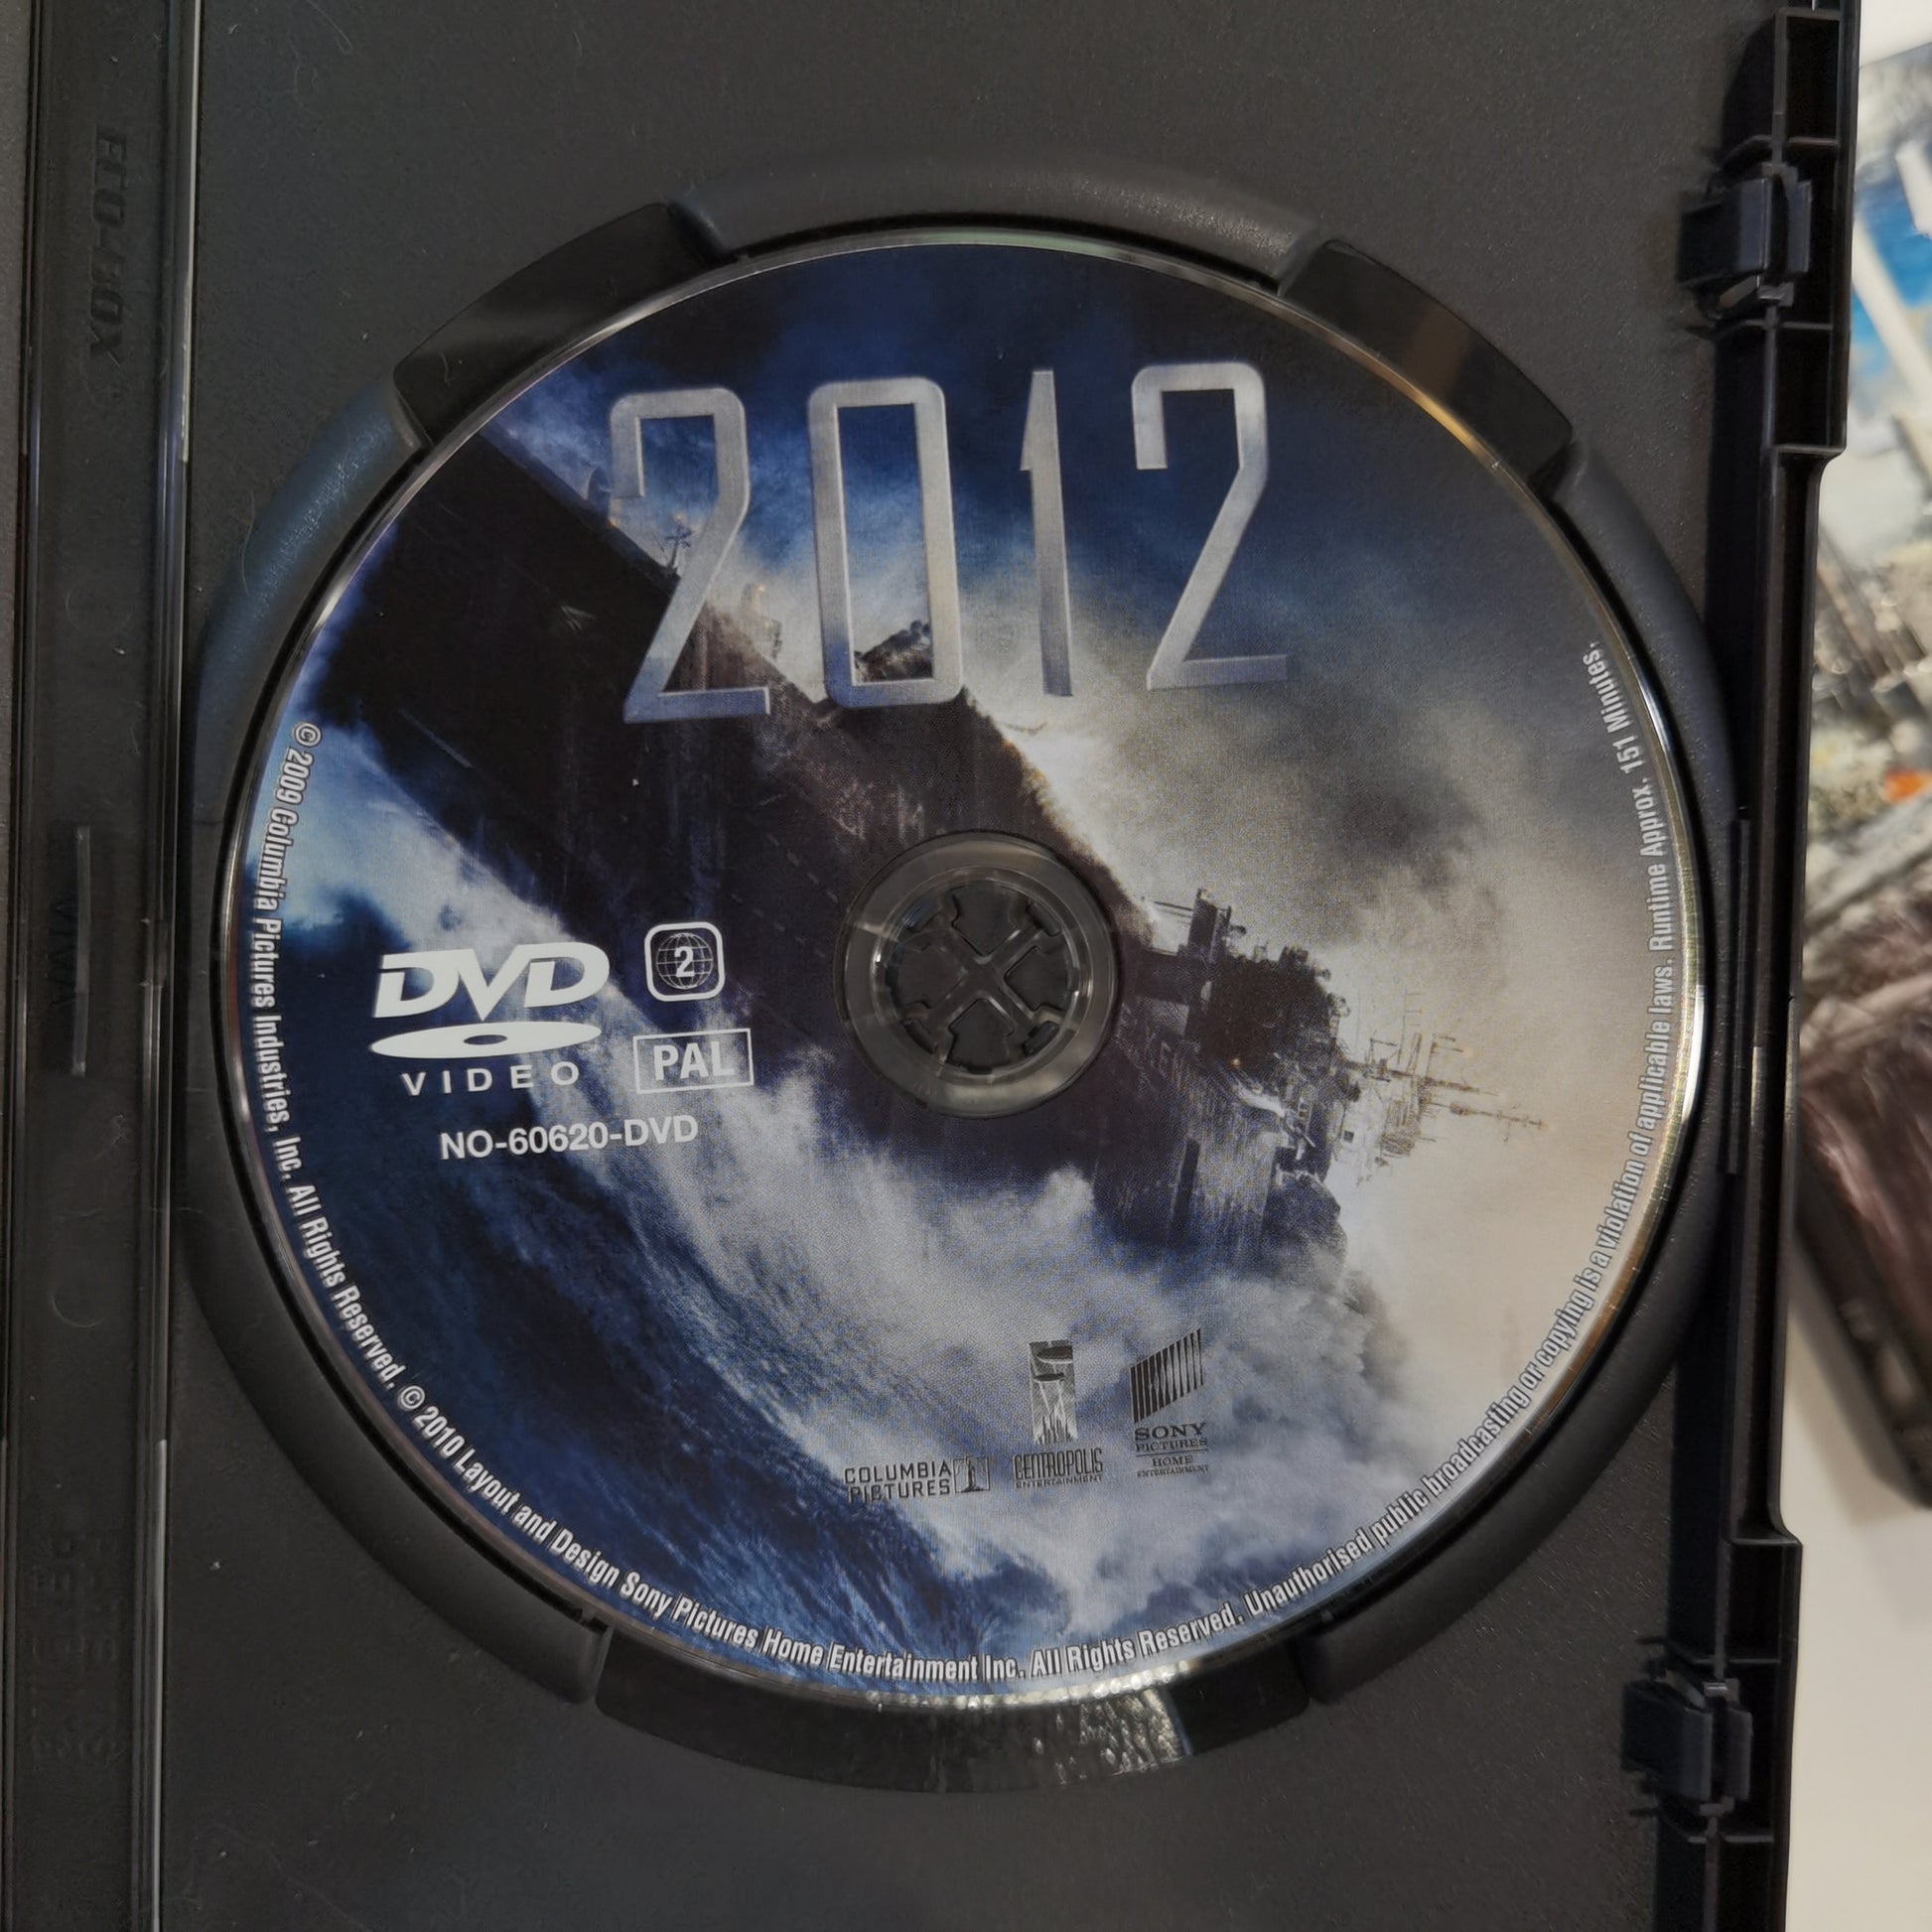 2012 (2009) - DVD SE 2010 Cover